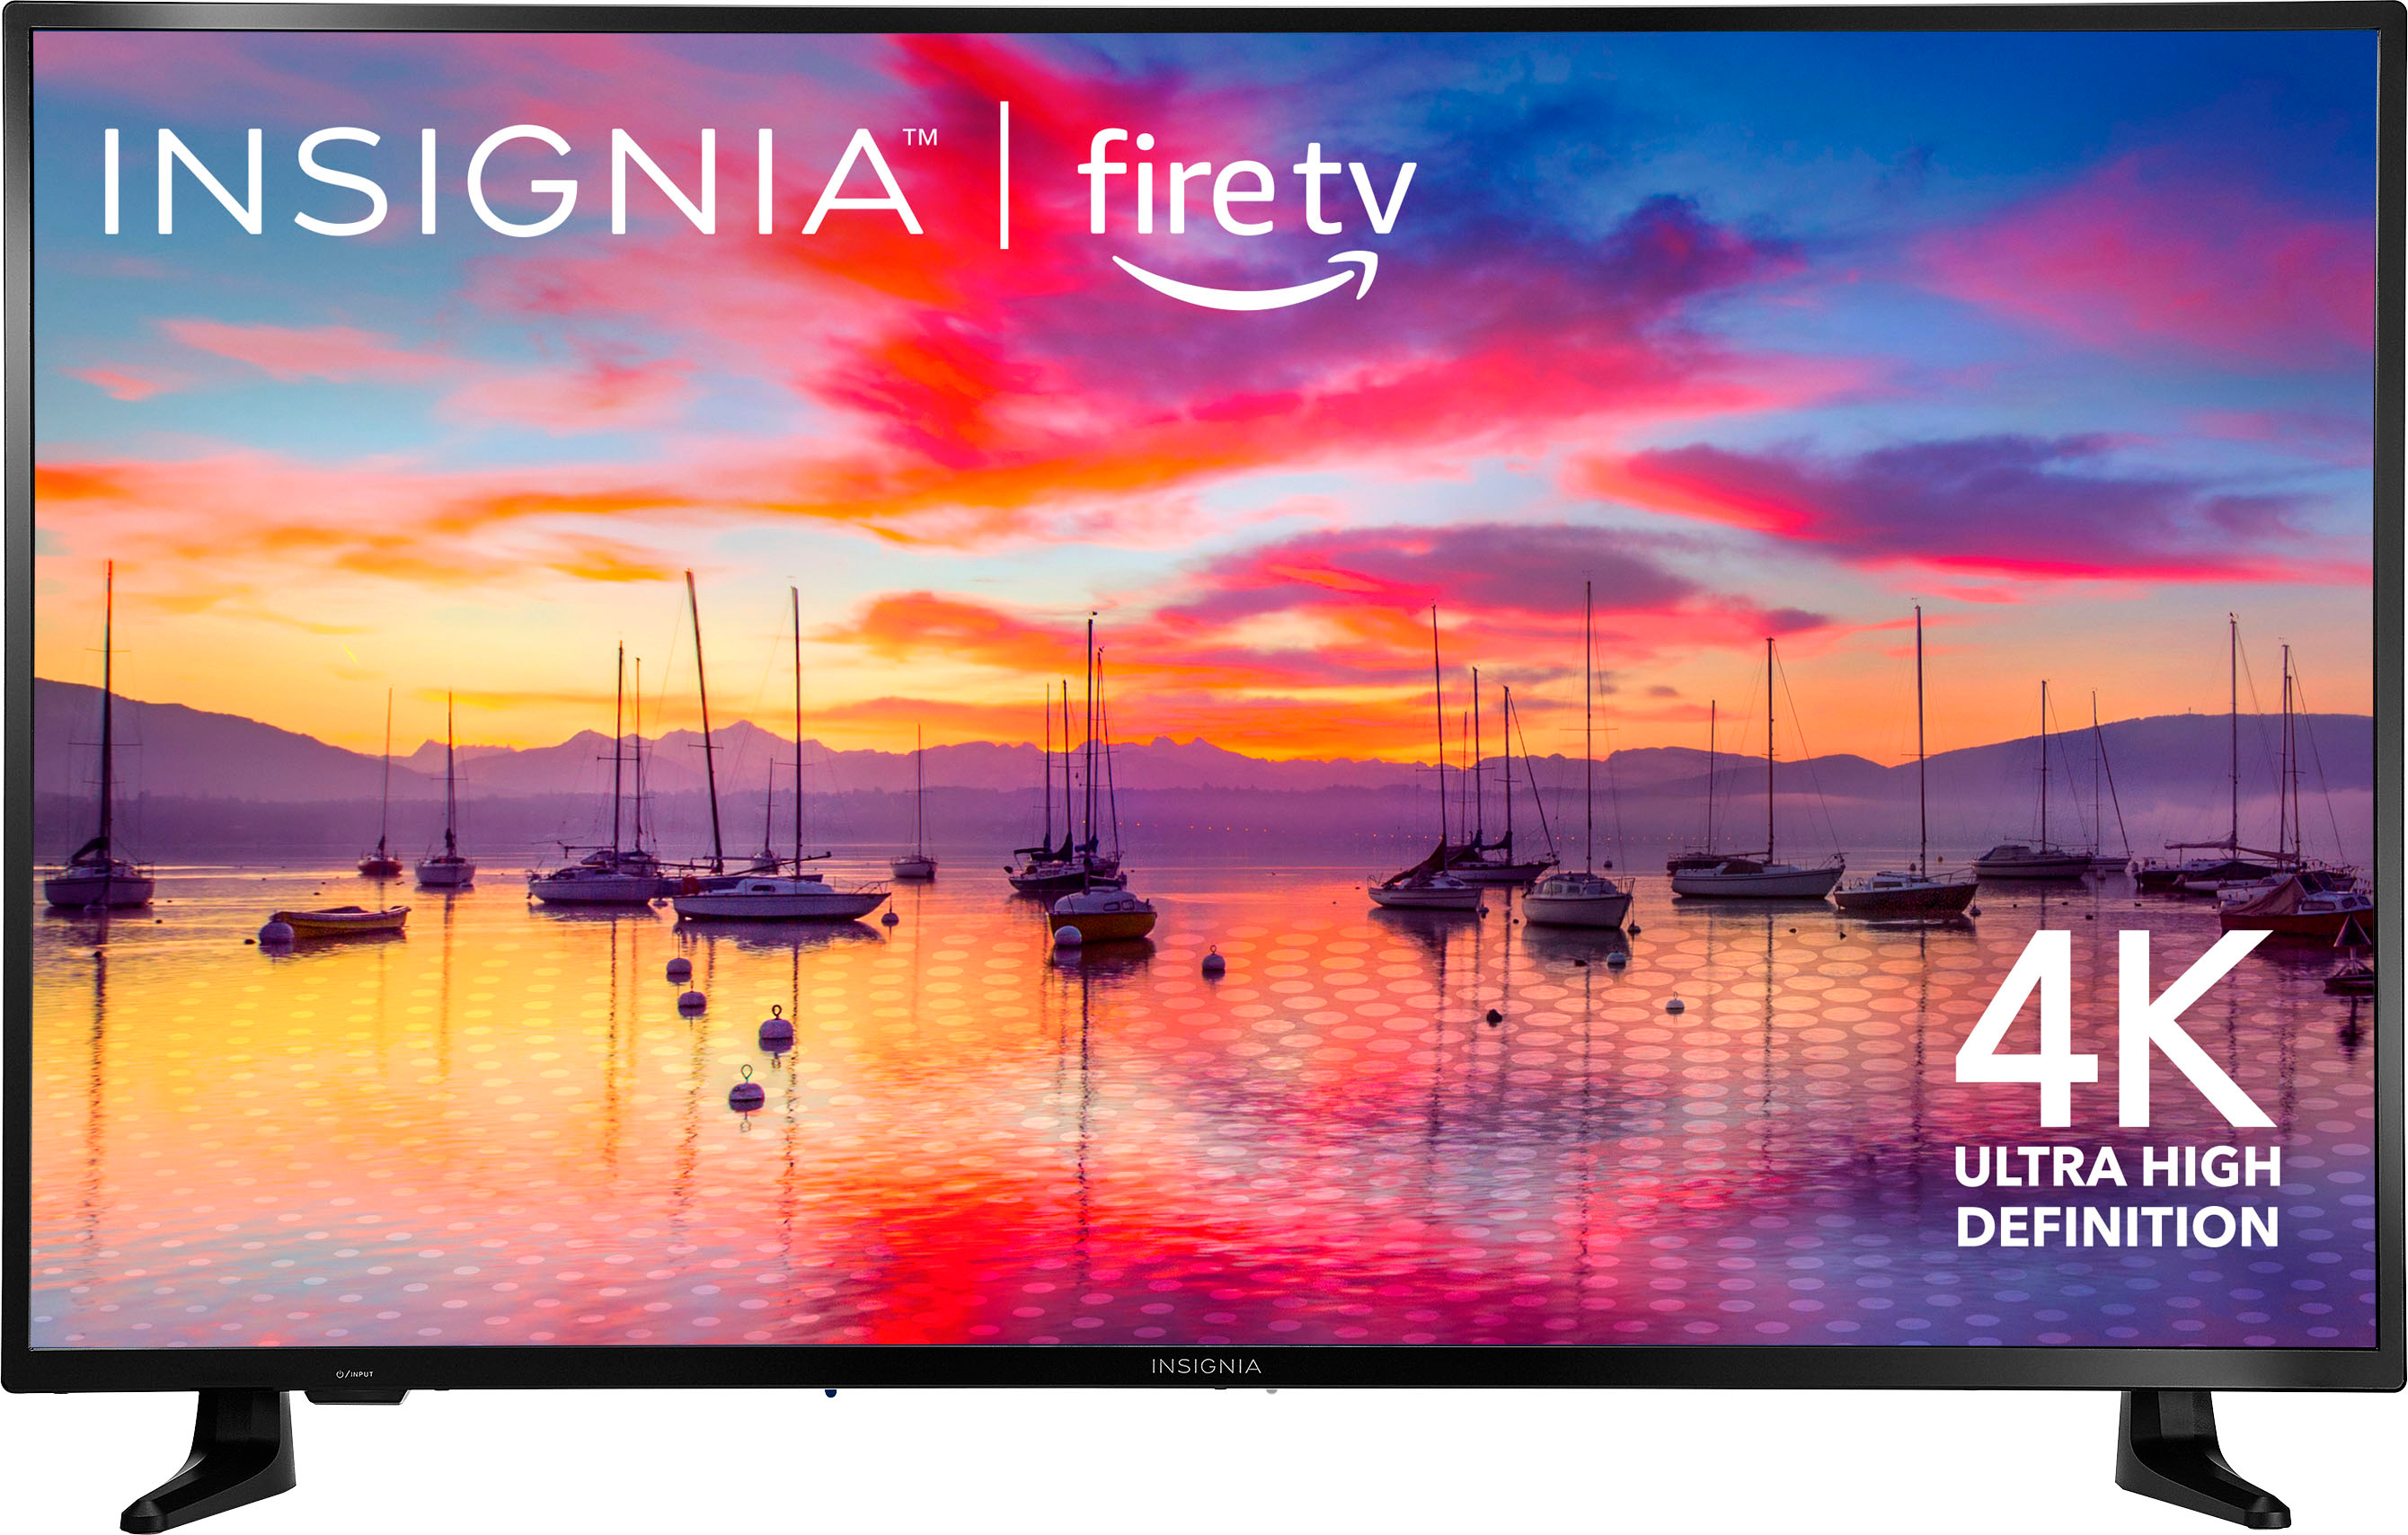 Insignia™ 50 Class F30 Series LED 4K UHD Smart Fire TV NS-50DF710NA21 -  Best Buy